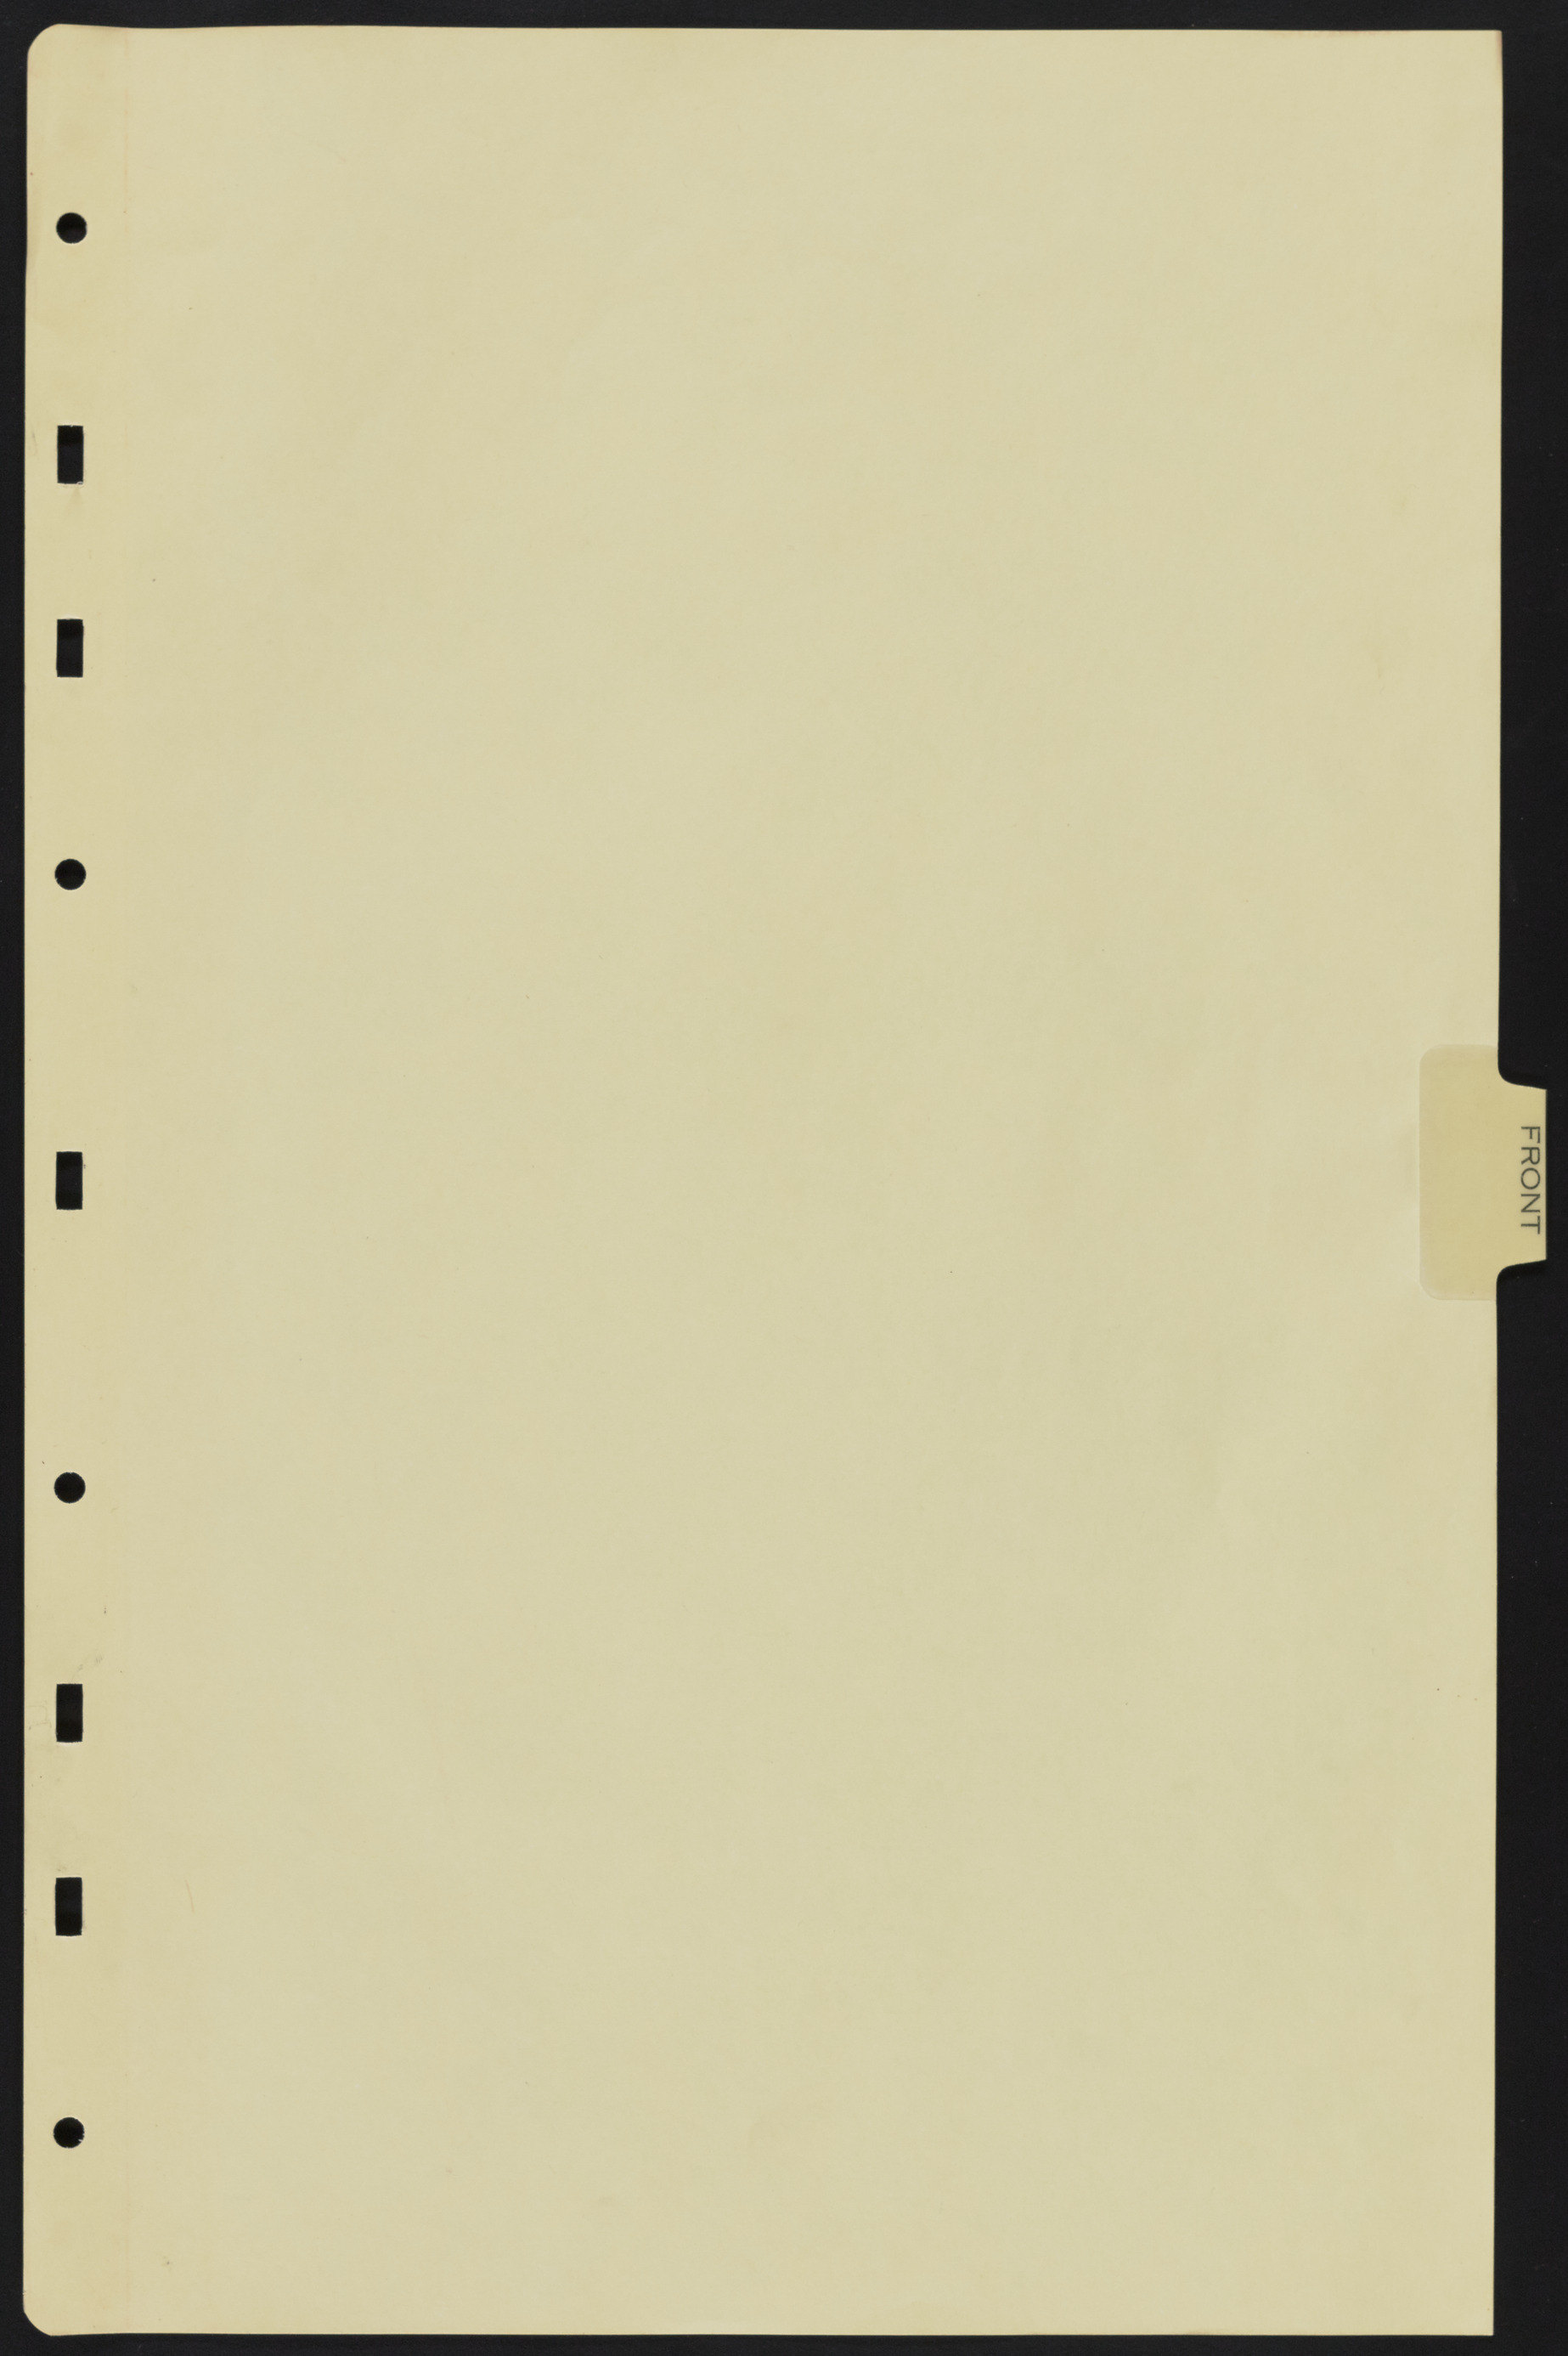 Las Vegas City Commission Legal Documents, February 29, 1944 to February 21, 1945, lvc000016-5